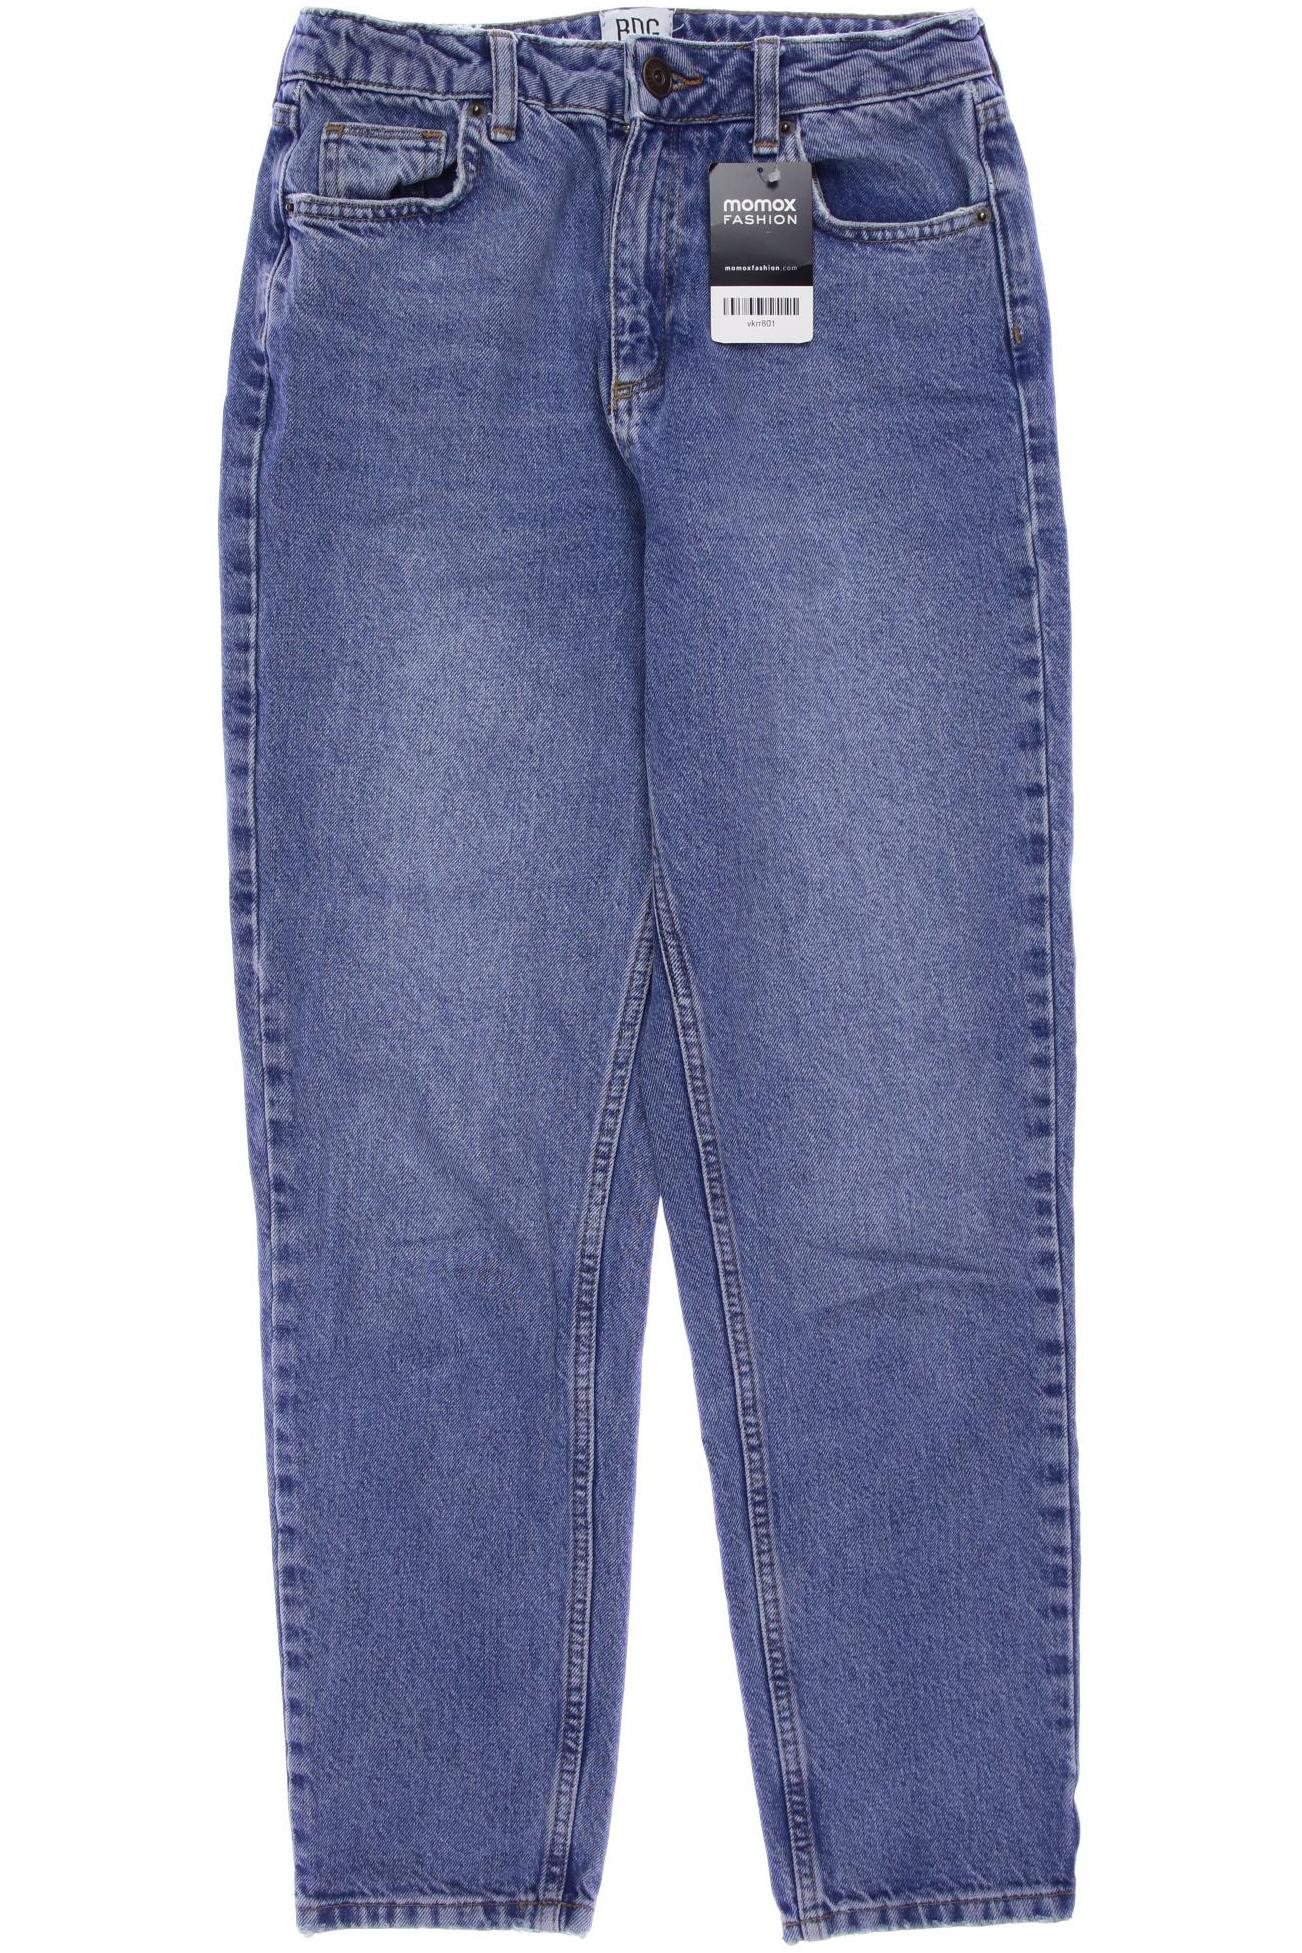 BDG Urban Outfitters Damen Jeans, blau von BDG Urban Outfitters